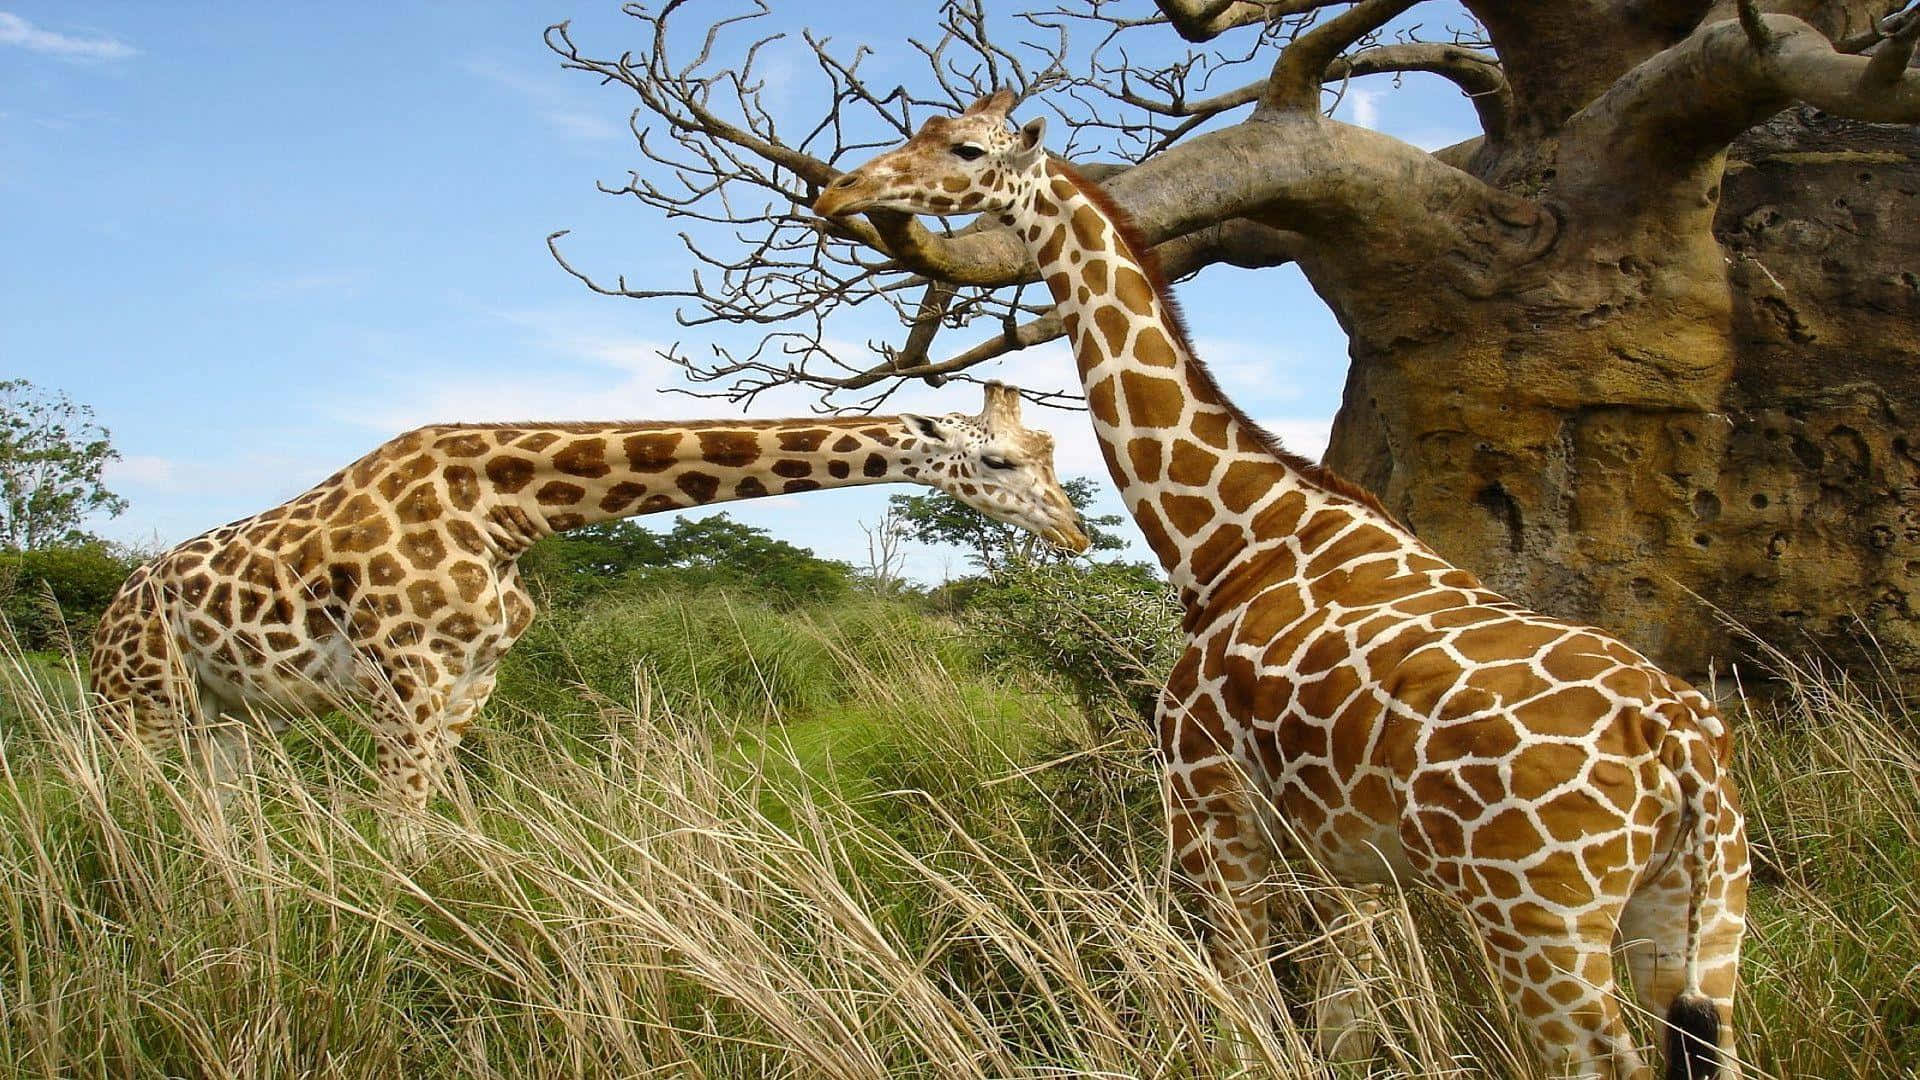 Wild Animals Giraffe Standing On Grass Near Tree Picture